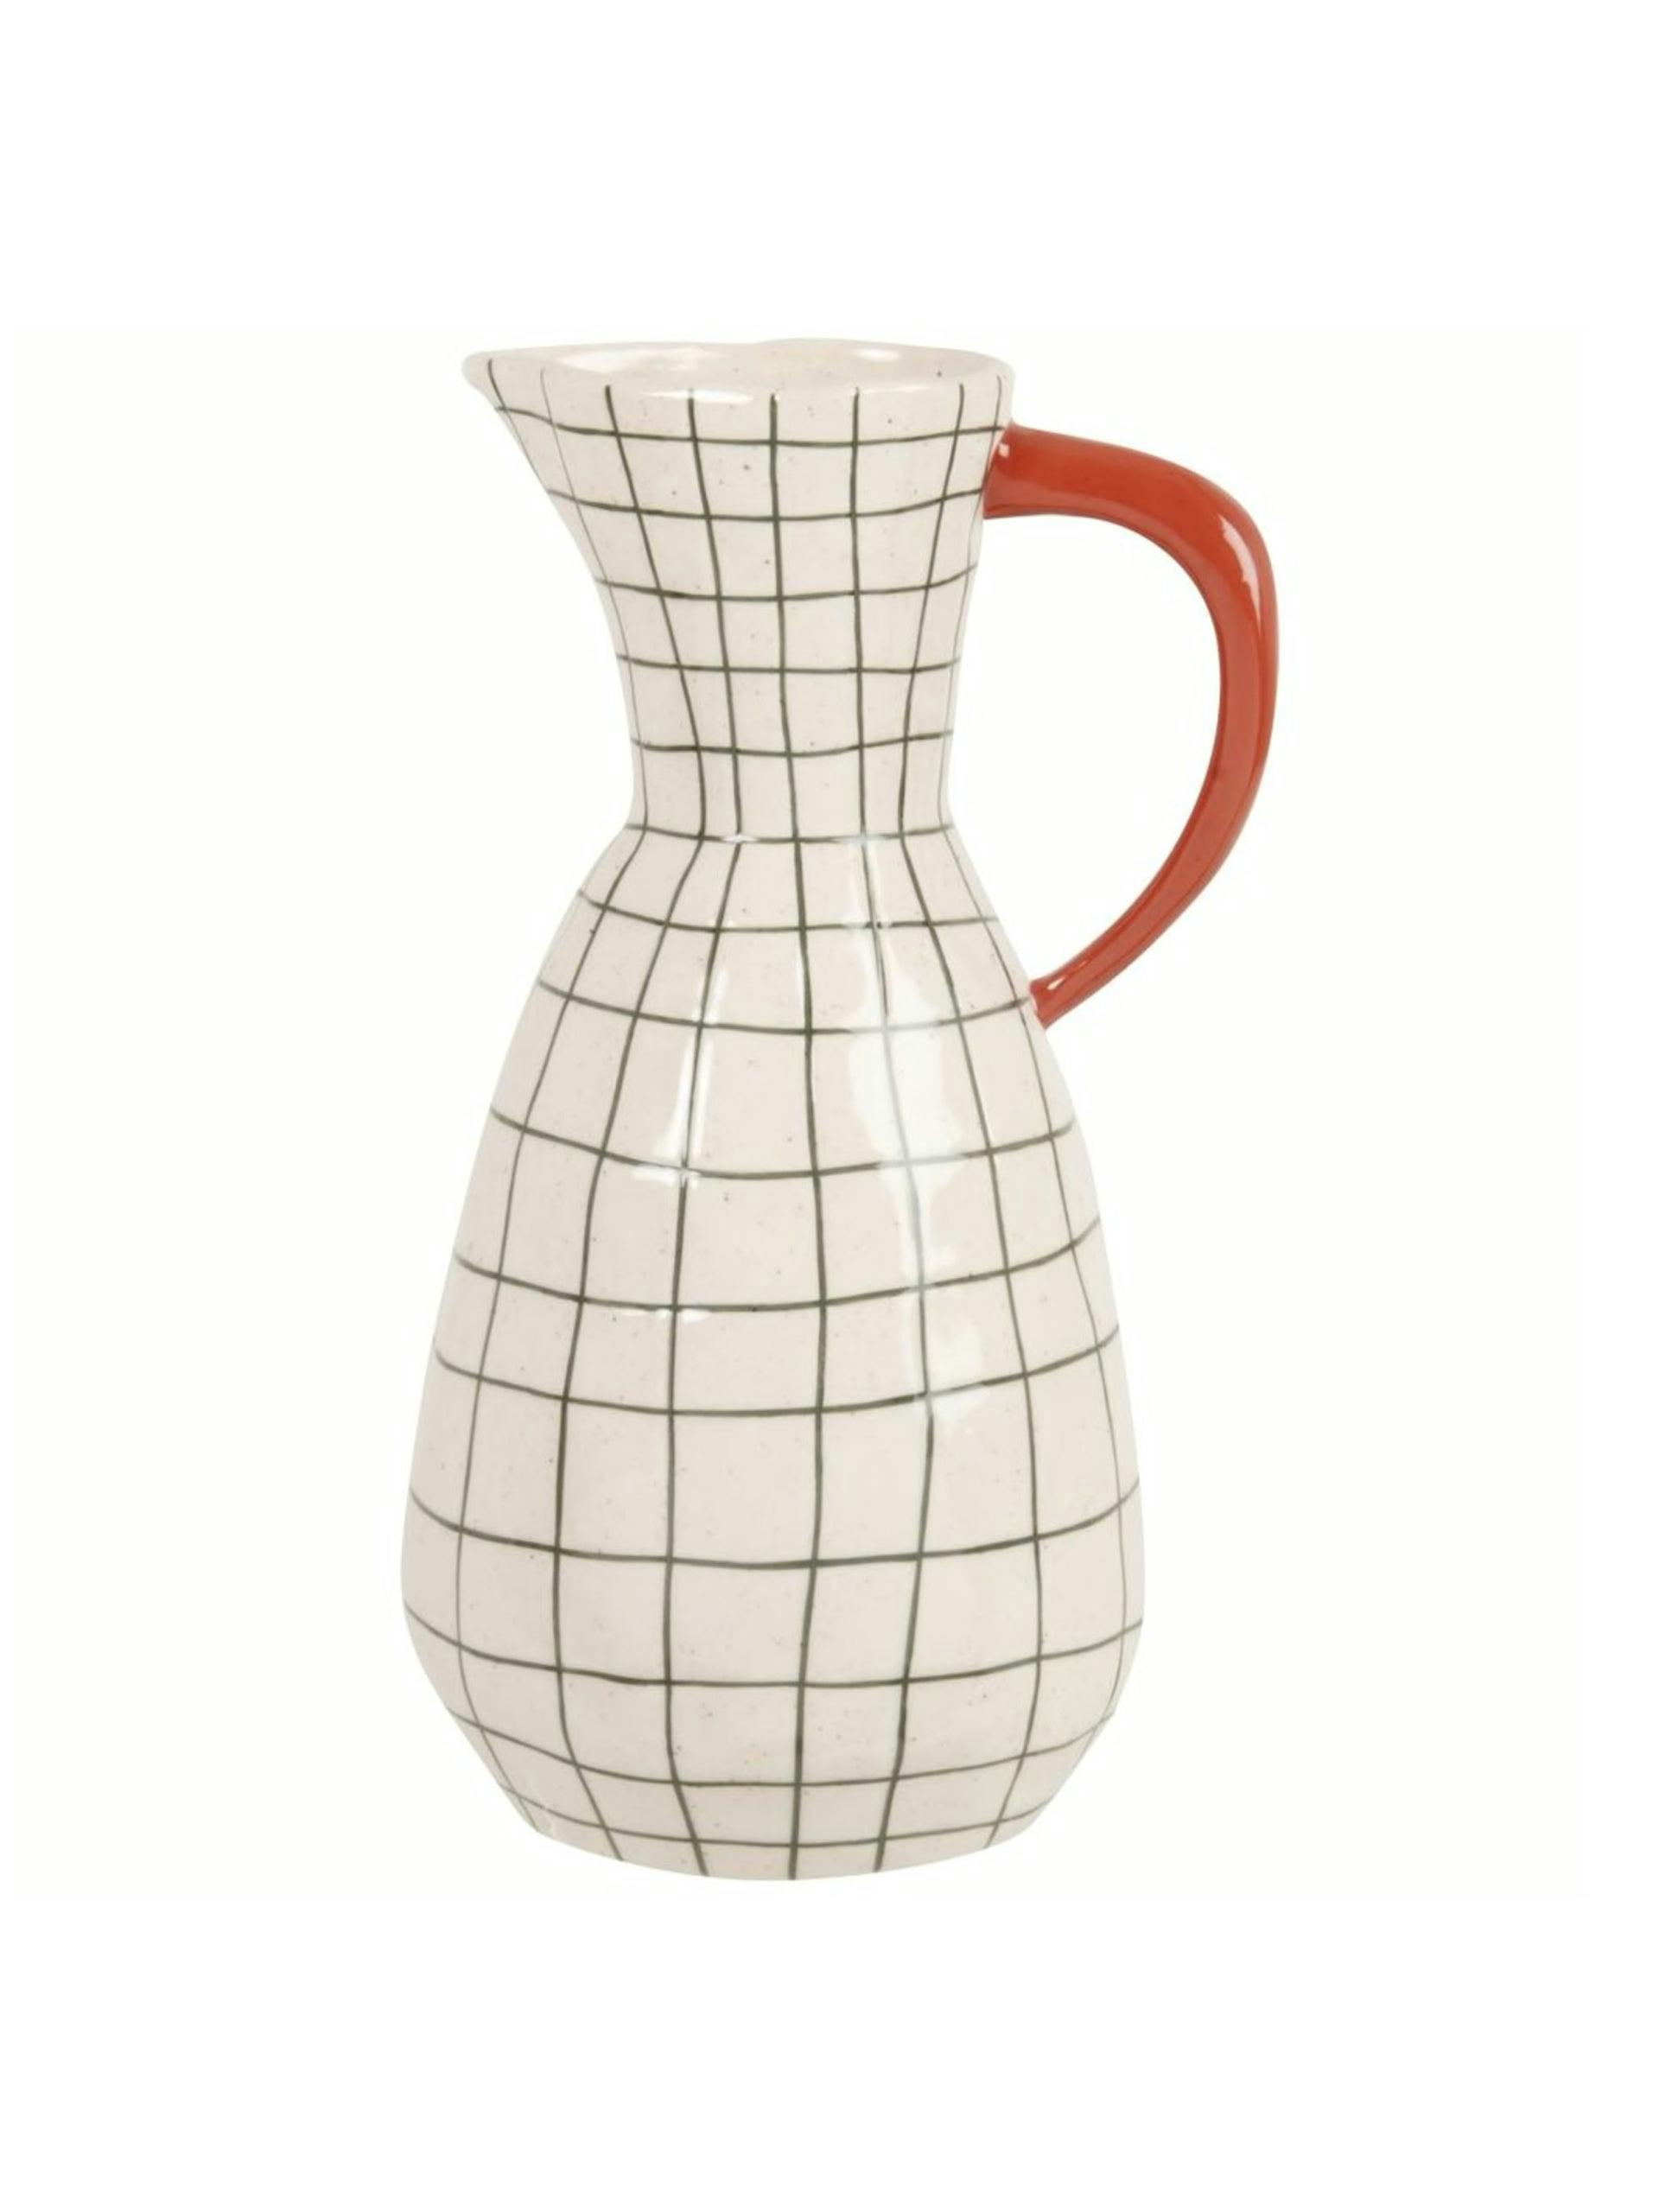 Checkered stoneware pitcher